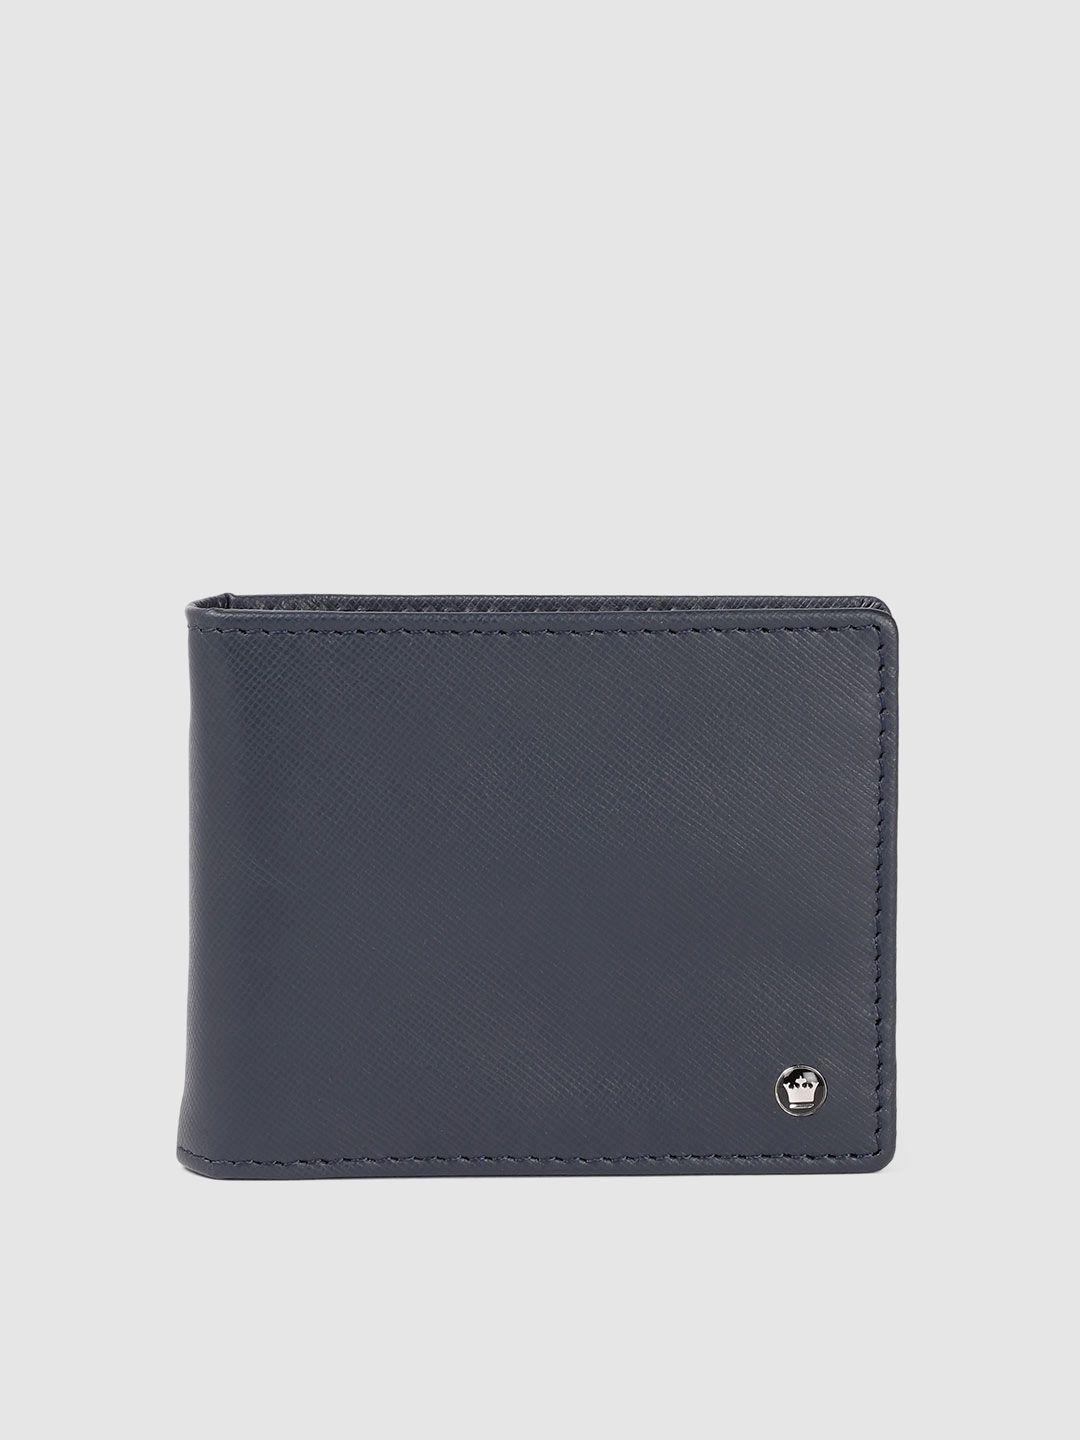 louis philippe men solid leather money clip wallet